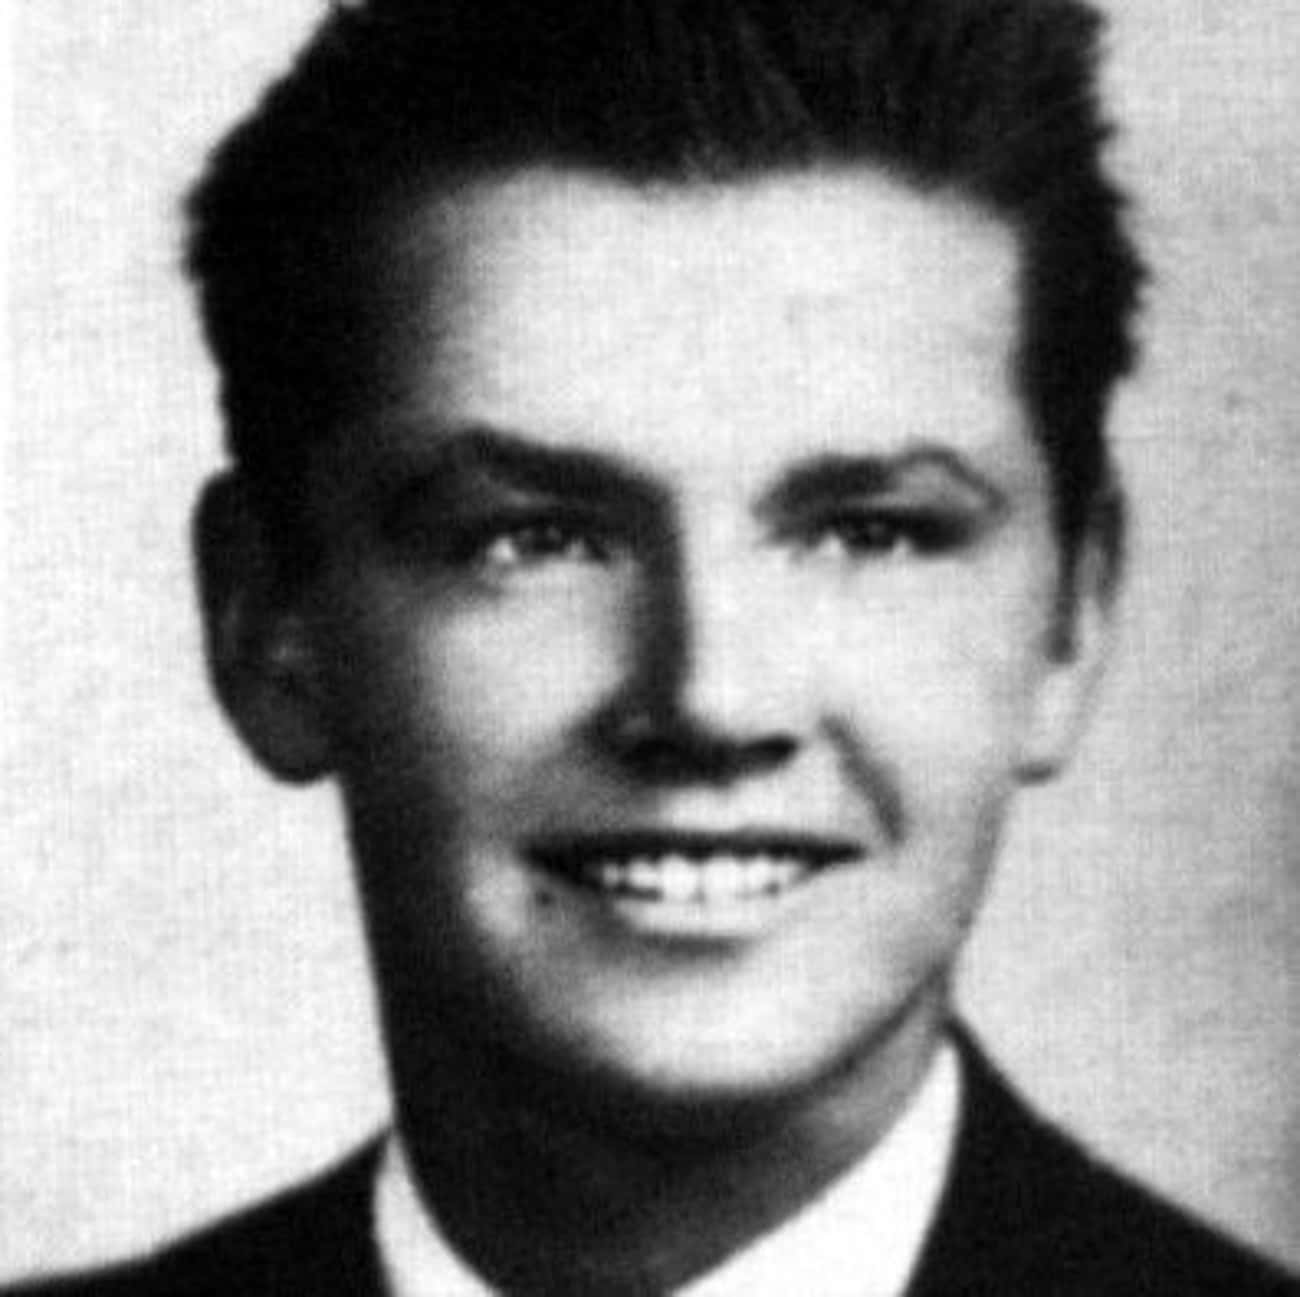 Young Jack Nicholson High School